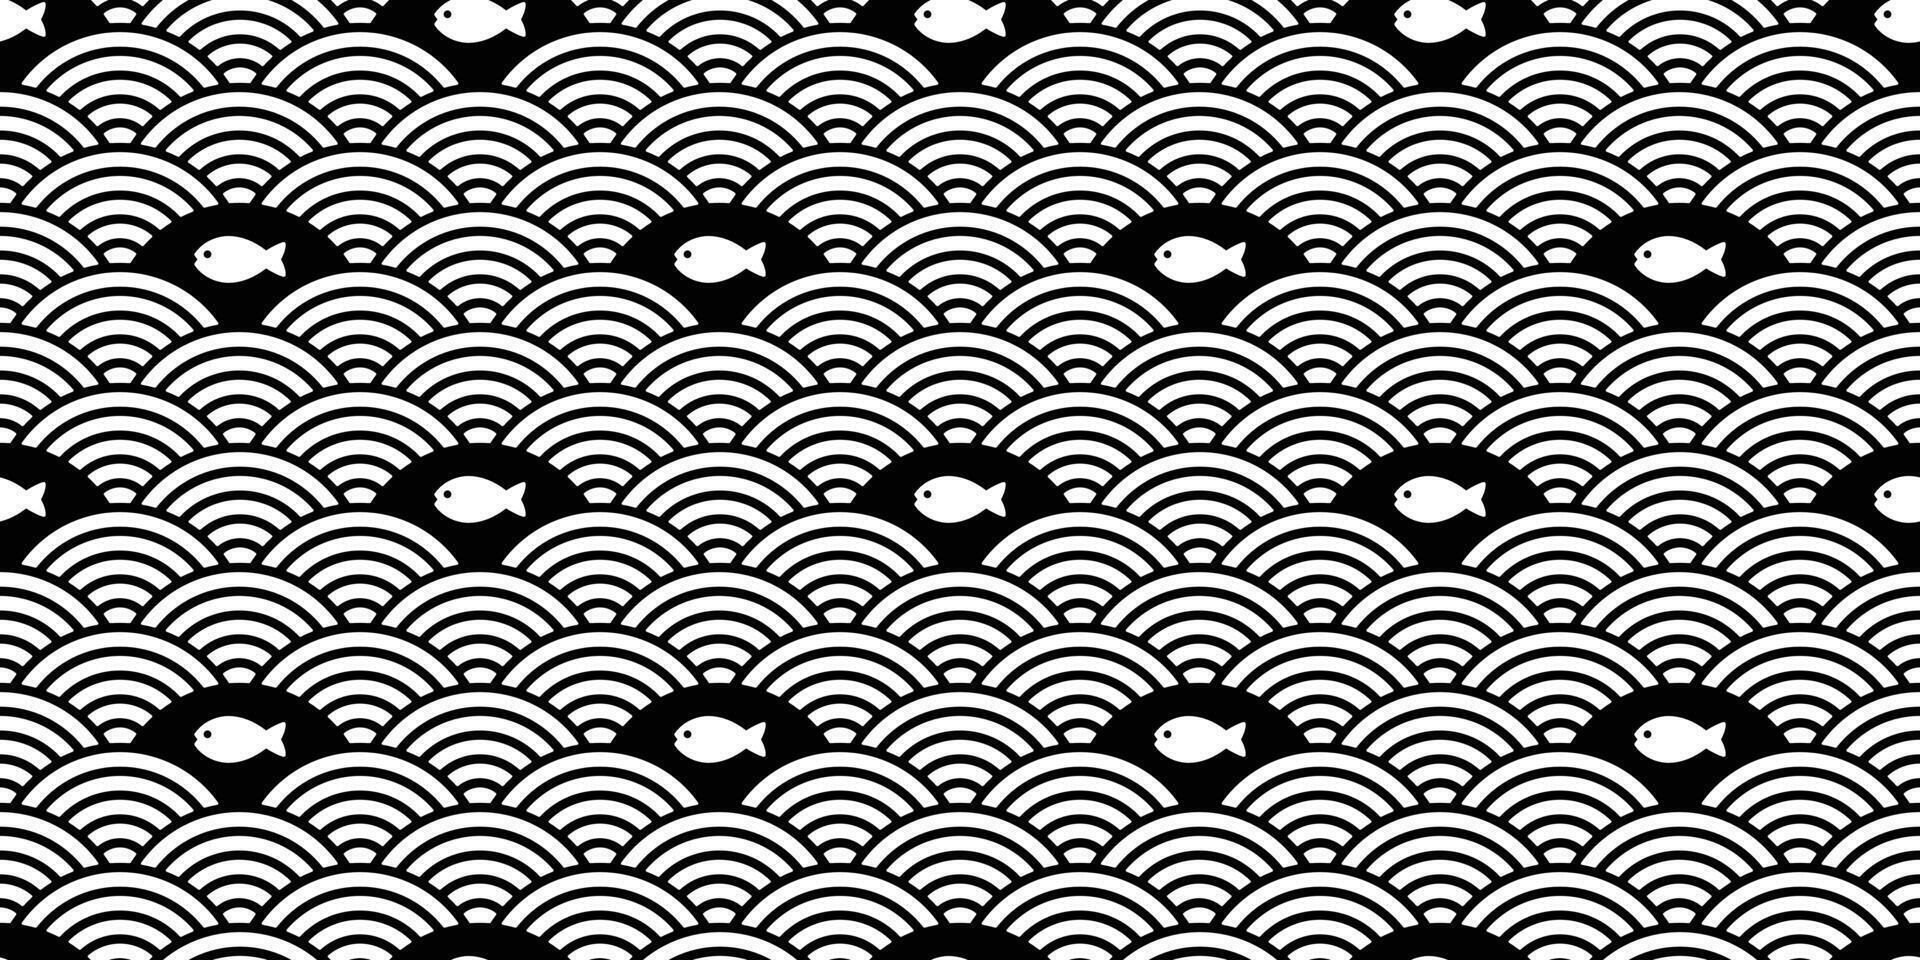 fish seamless pattern Japanese wave salmon tuna shark vector scarf isolated cartoon repeat background tile wallpaper illustration doodle design